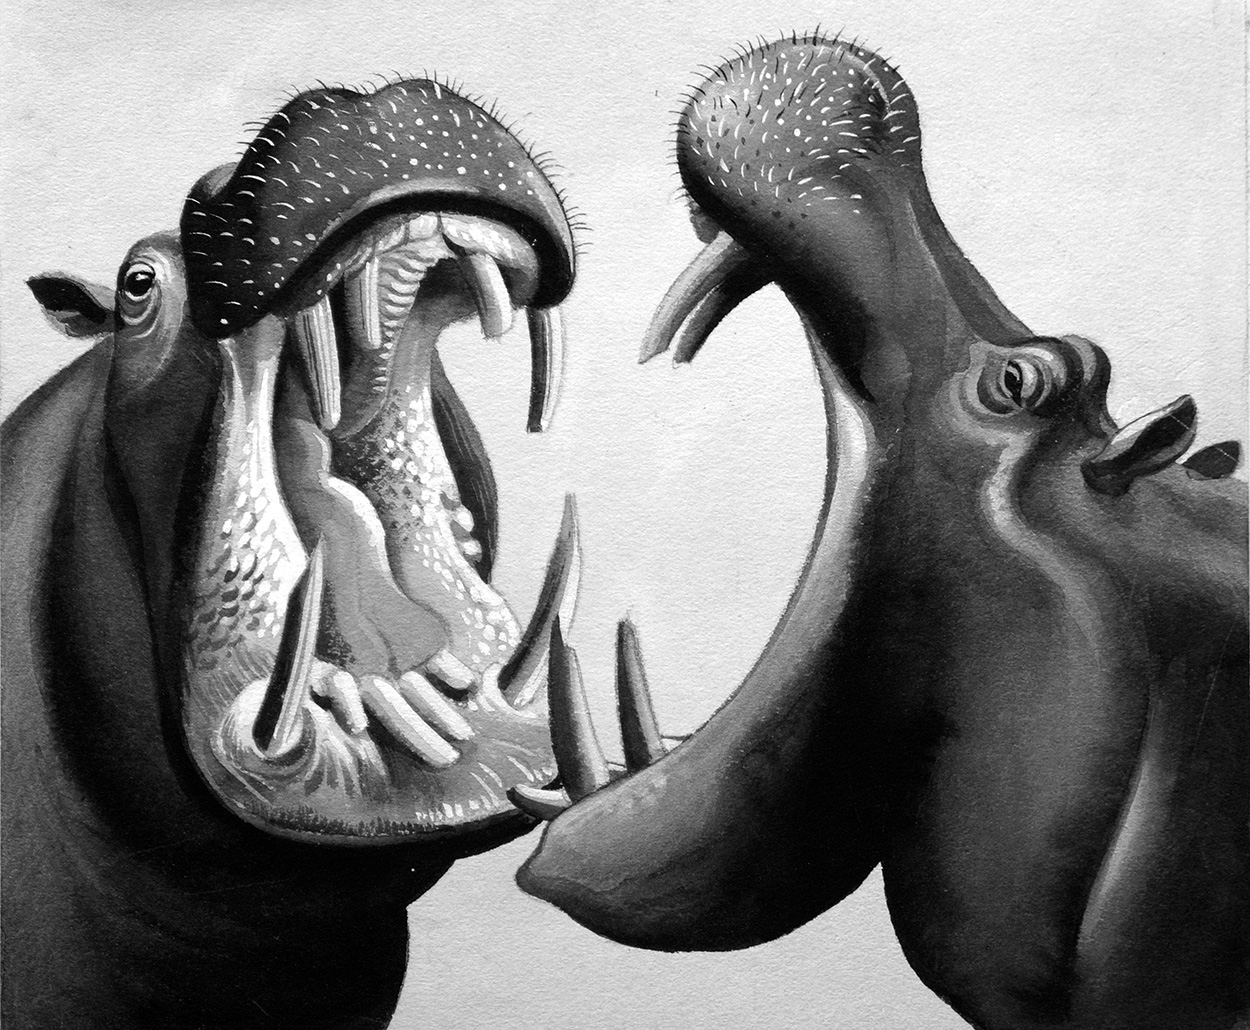 Hippo Fight (Original) art by John Keay Art at The Illustration Art Gallery